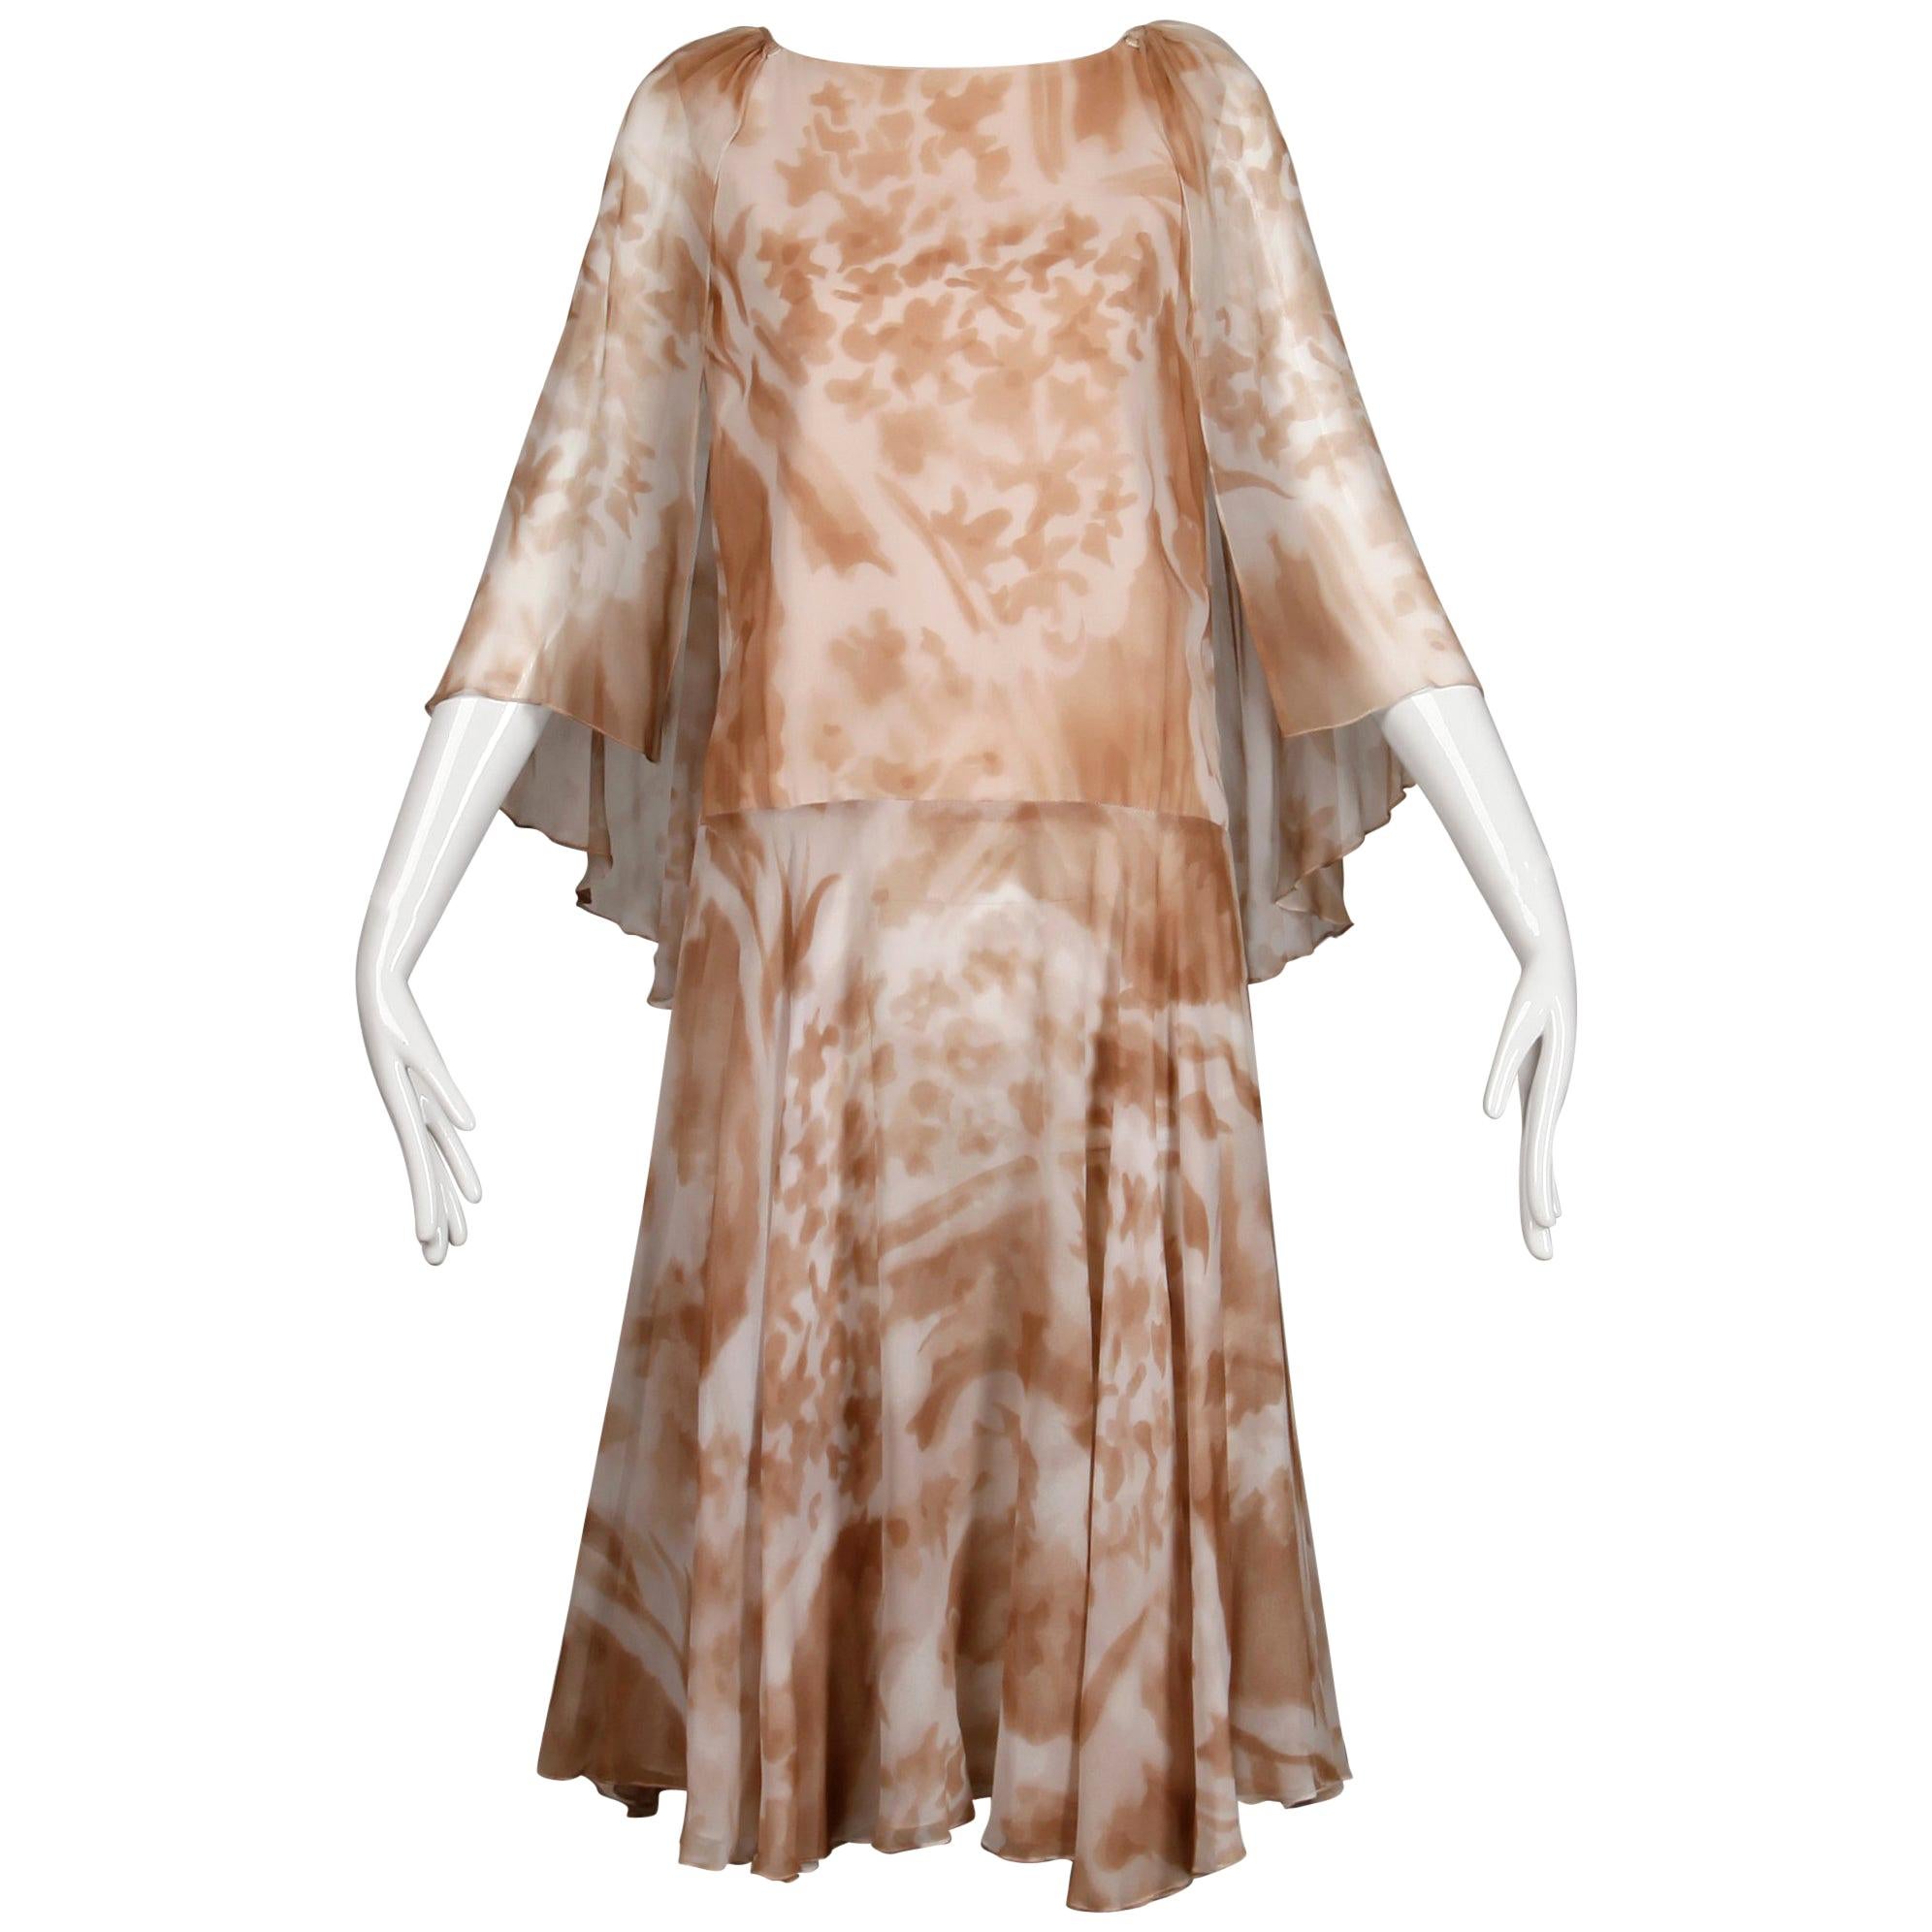 1970s Mr. Blackwell Vintage Sheer Silk Chiffon Print Dress with Detachable Cape